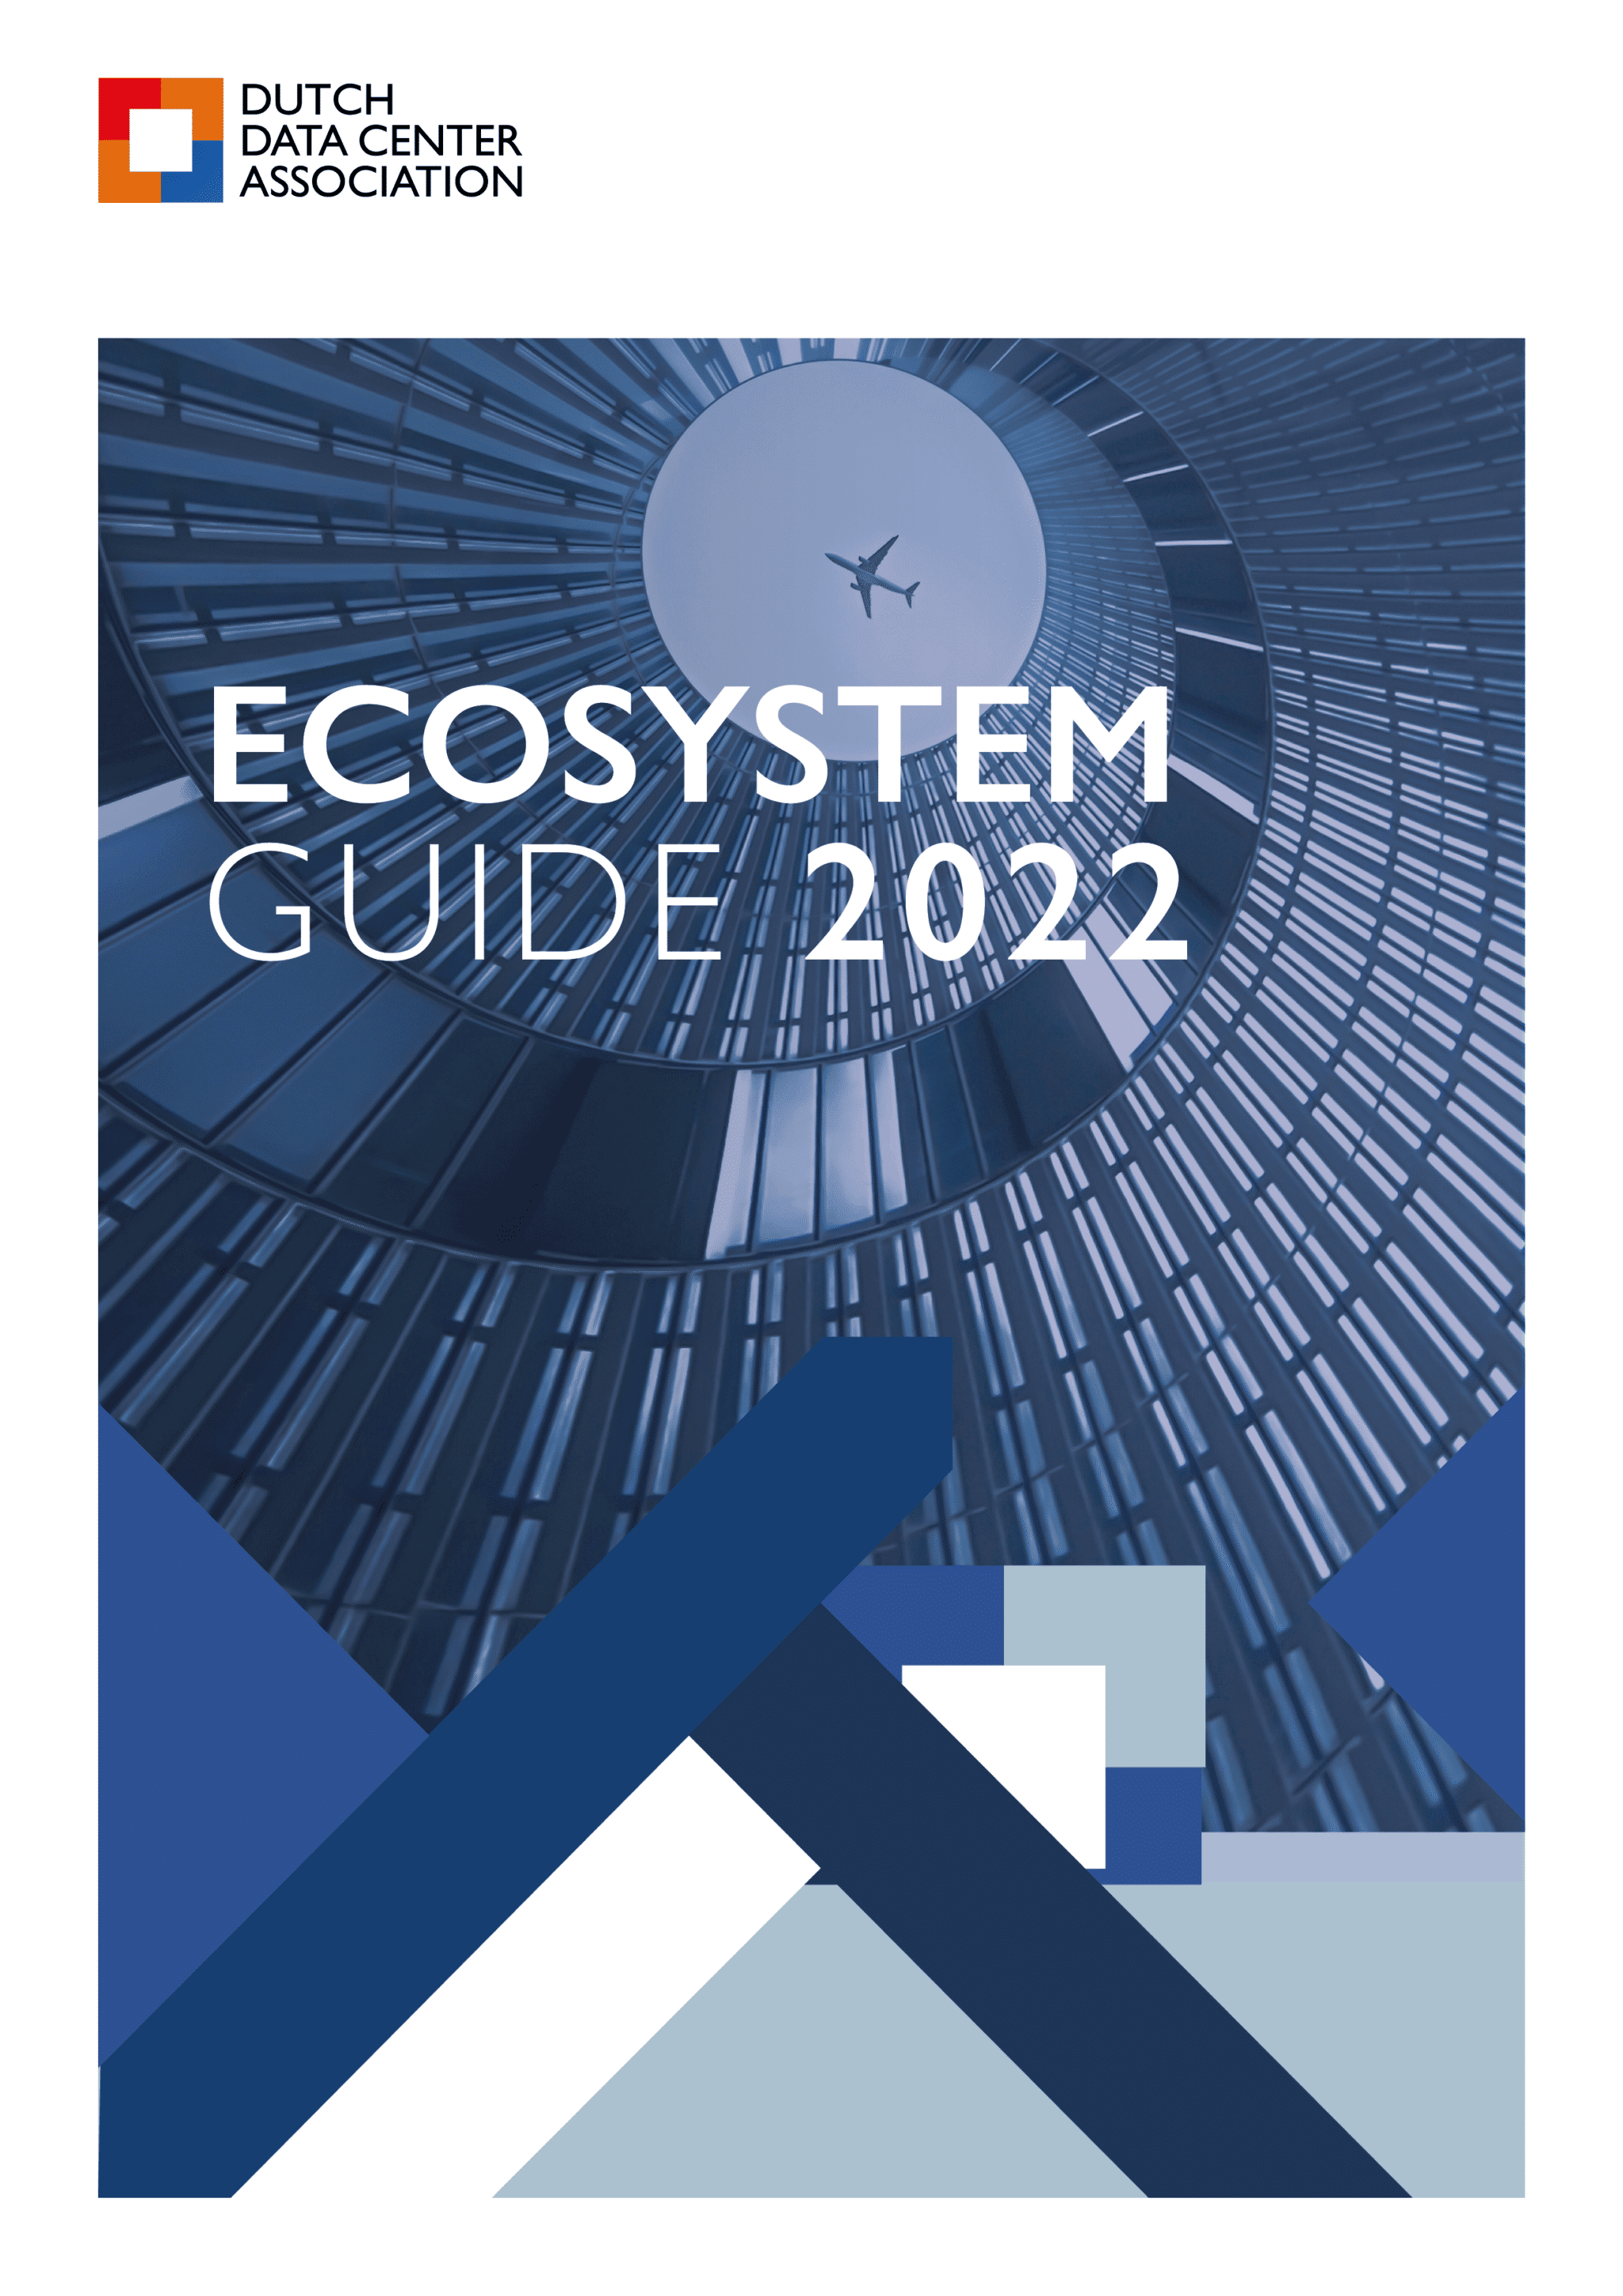 Guide | DDA publishes Ecosystem Guide 2022